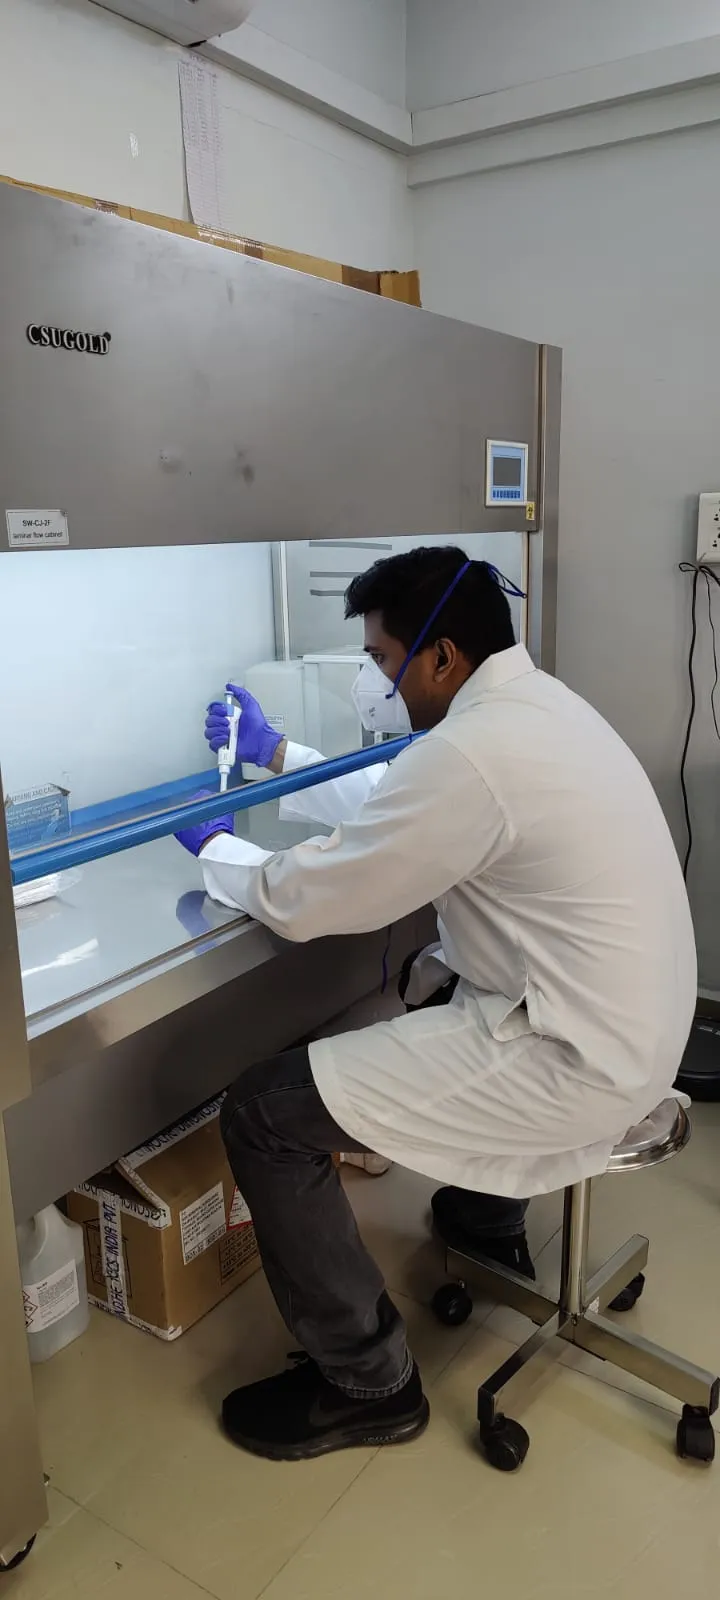 Serology Blood Tests in Pune - ELISA, Laminar Flow Cabinet in Microbiology